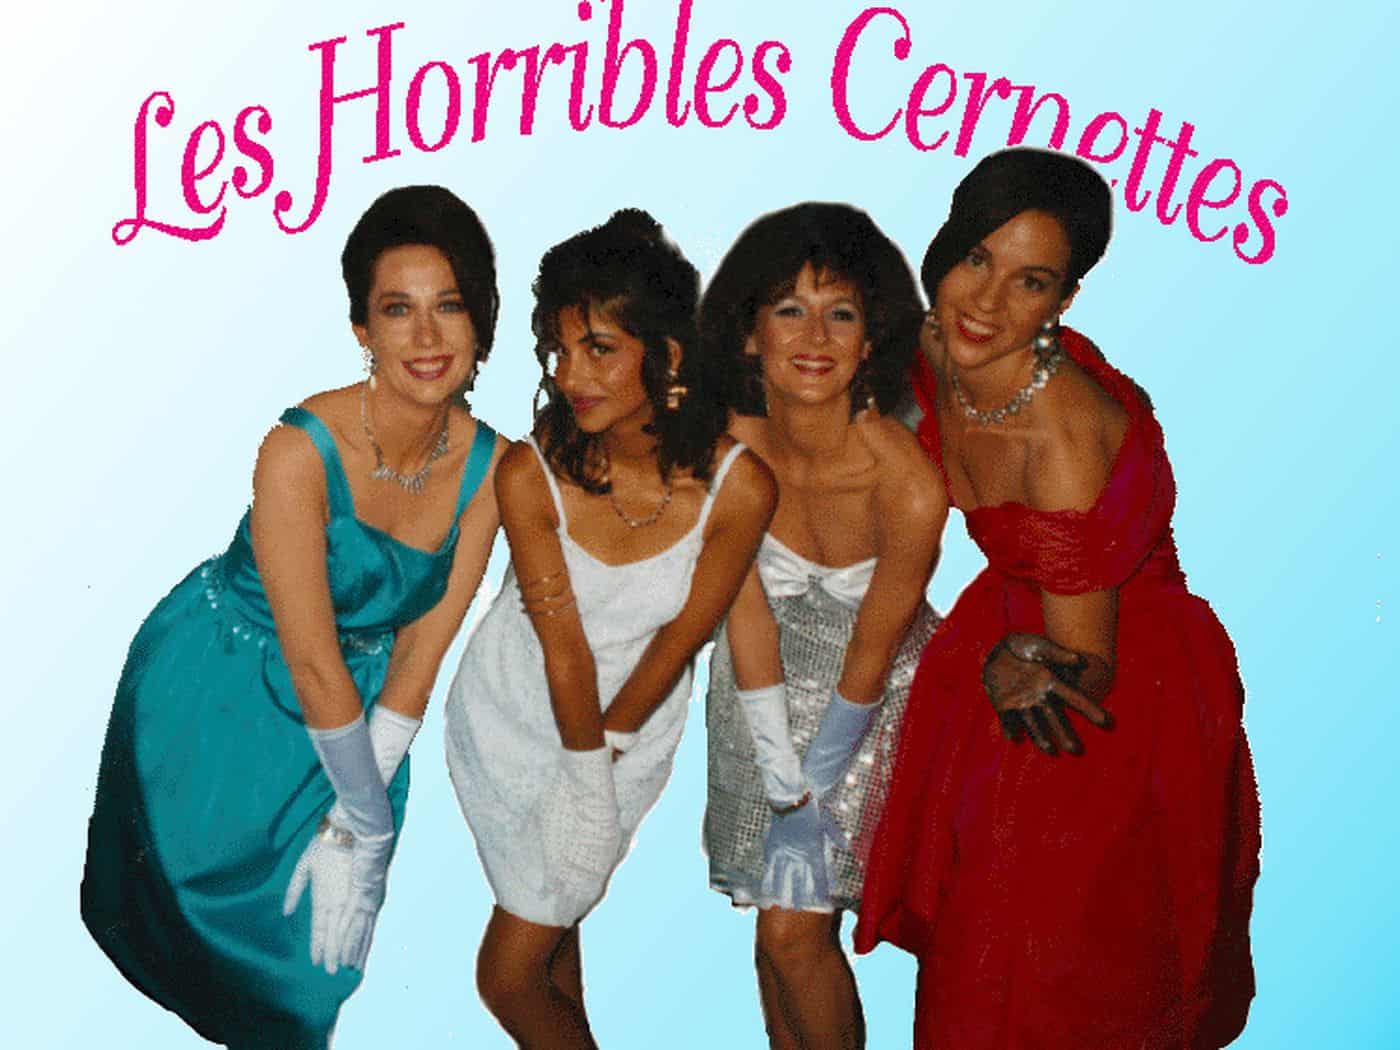 Album art for Les Horribles Cernettes, the first image ever uploaded to the Internet.